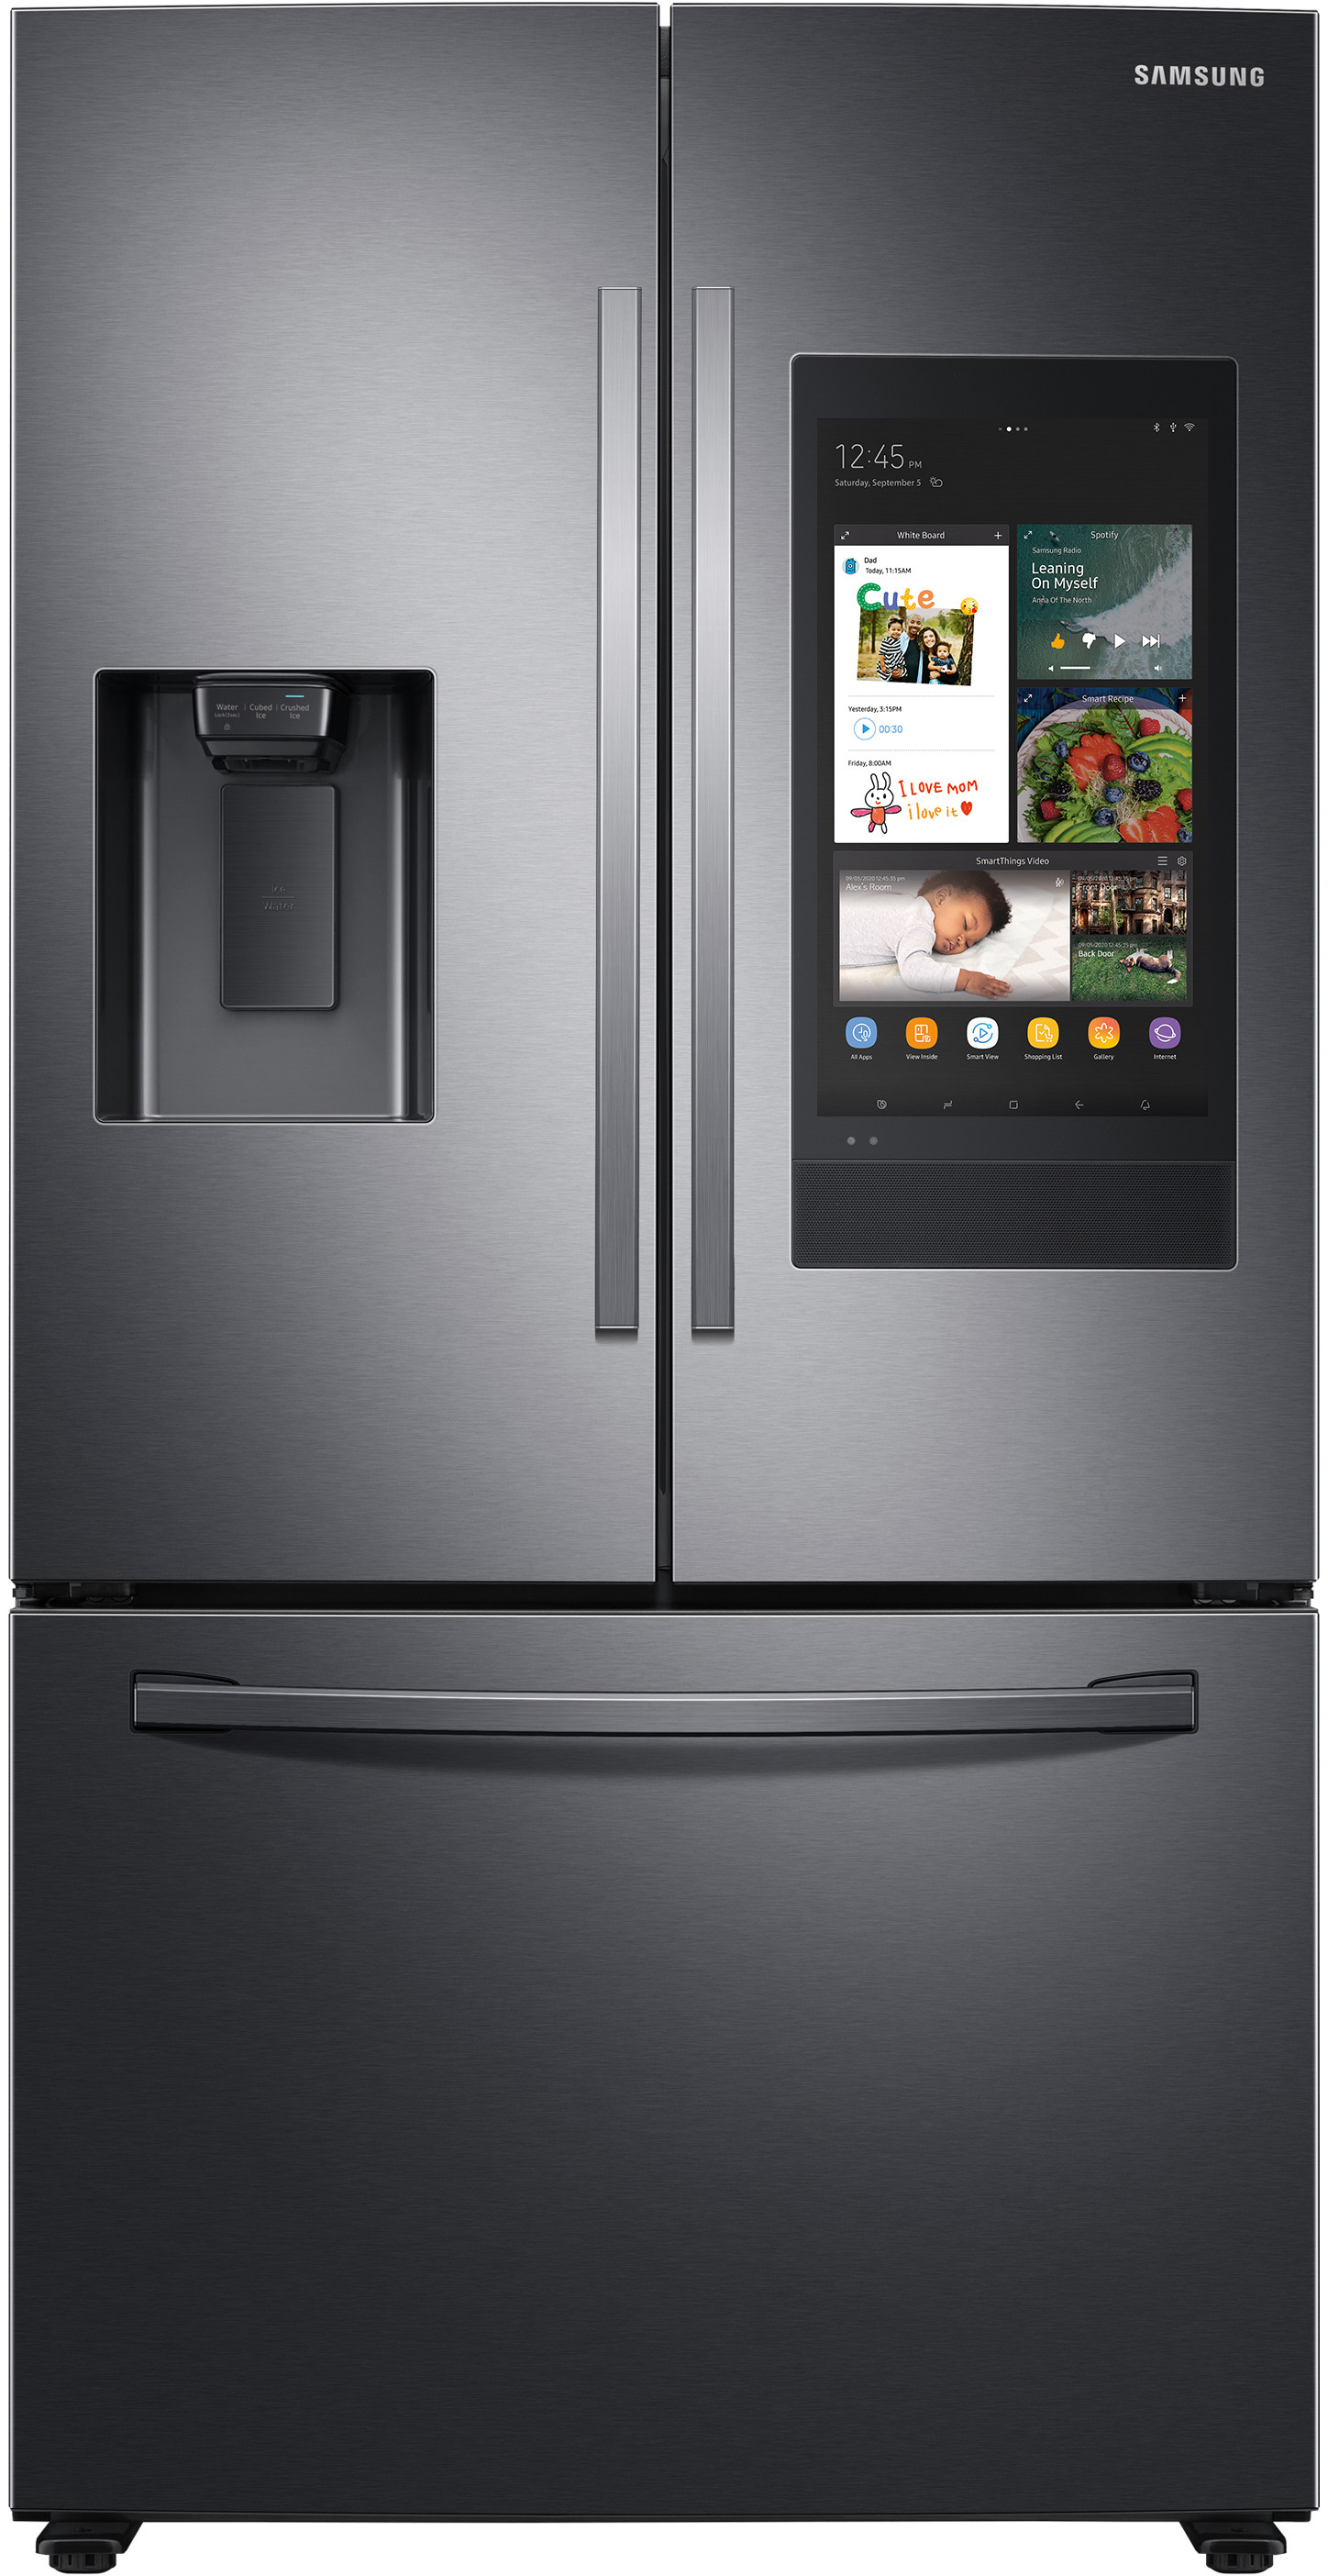 Samsung Sareradwmw9490 4 Piece Kitchen Appliances Package With French Door Refrigerator Gas Range Dishwasher And Over The Range Microwave